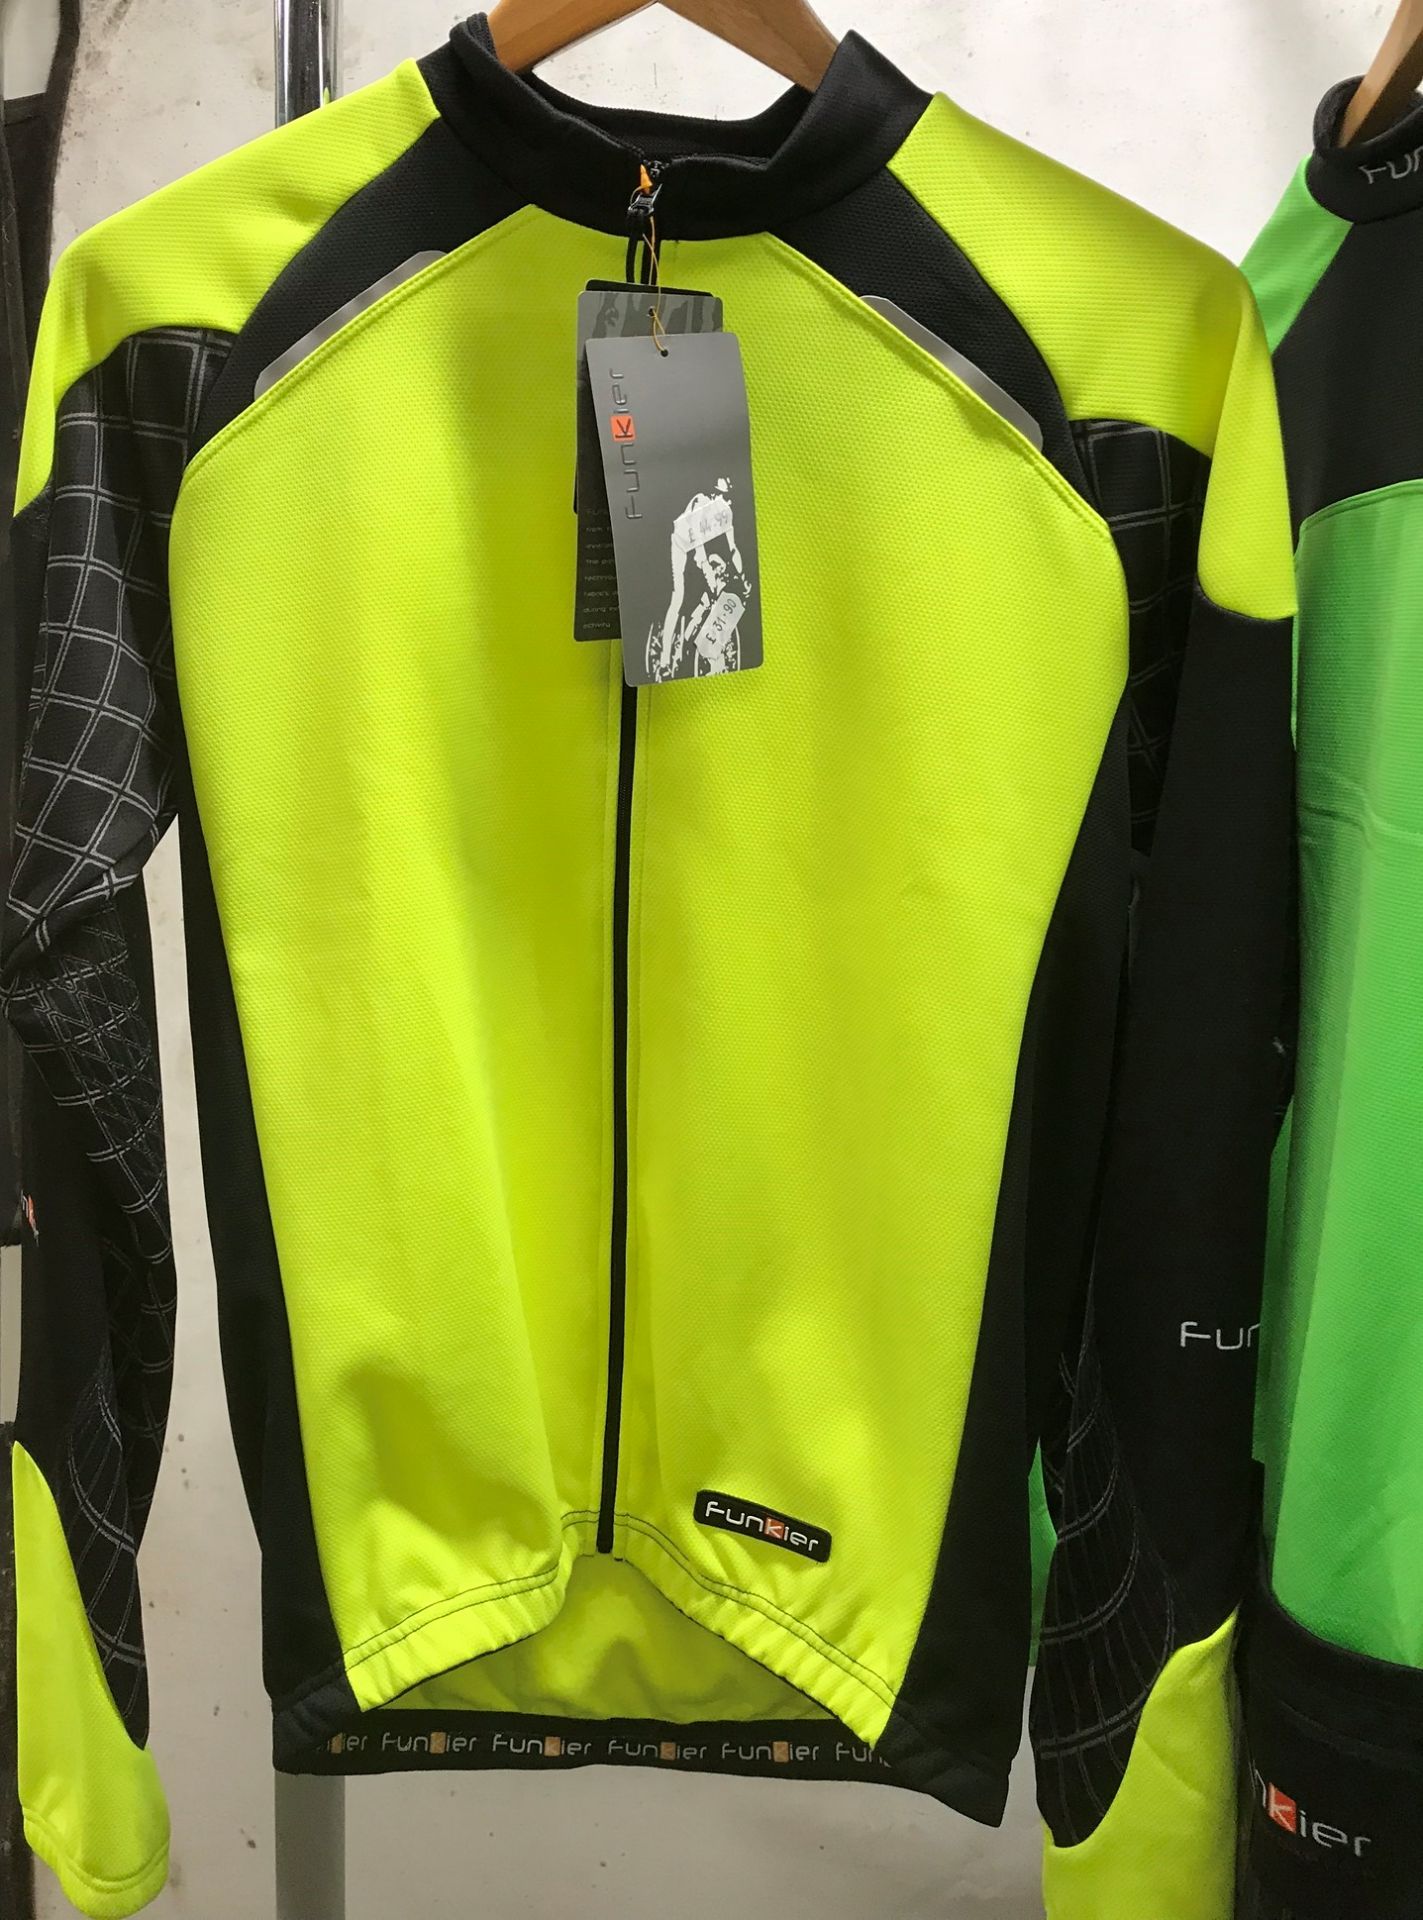 4 x Funkier mens cycling jerseys - sizes: 1 x M & 3 x L - new w/ tags - Image 2 of 9